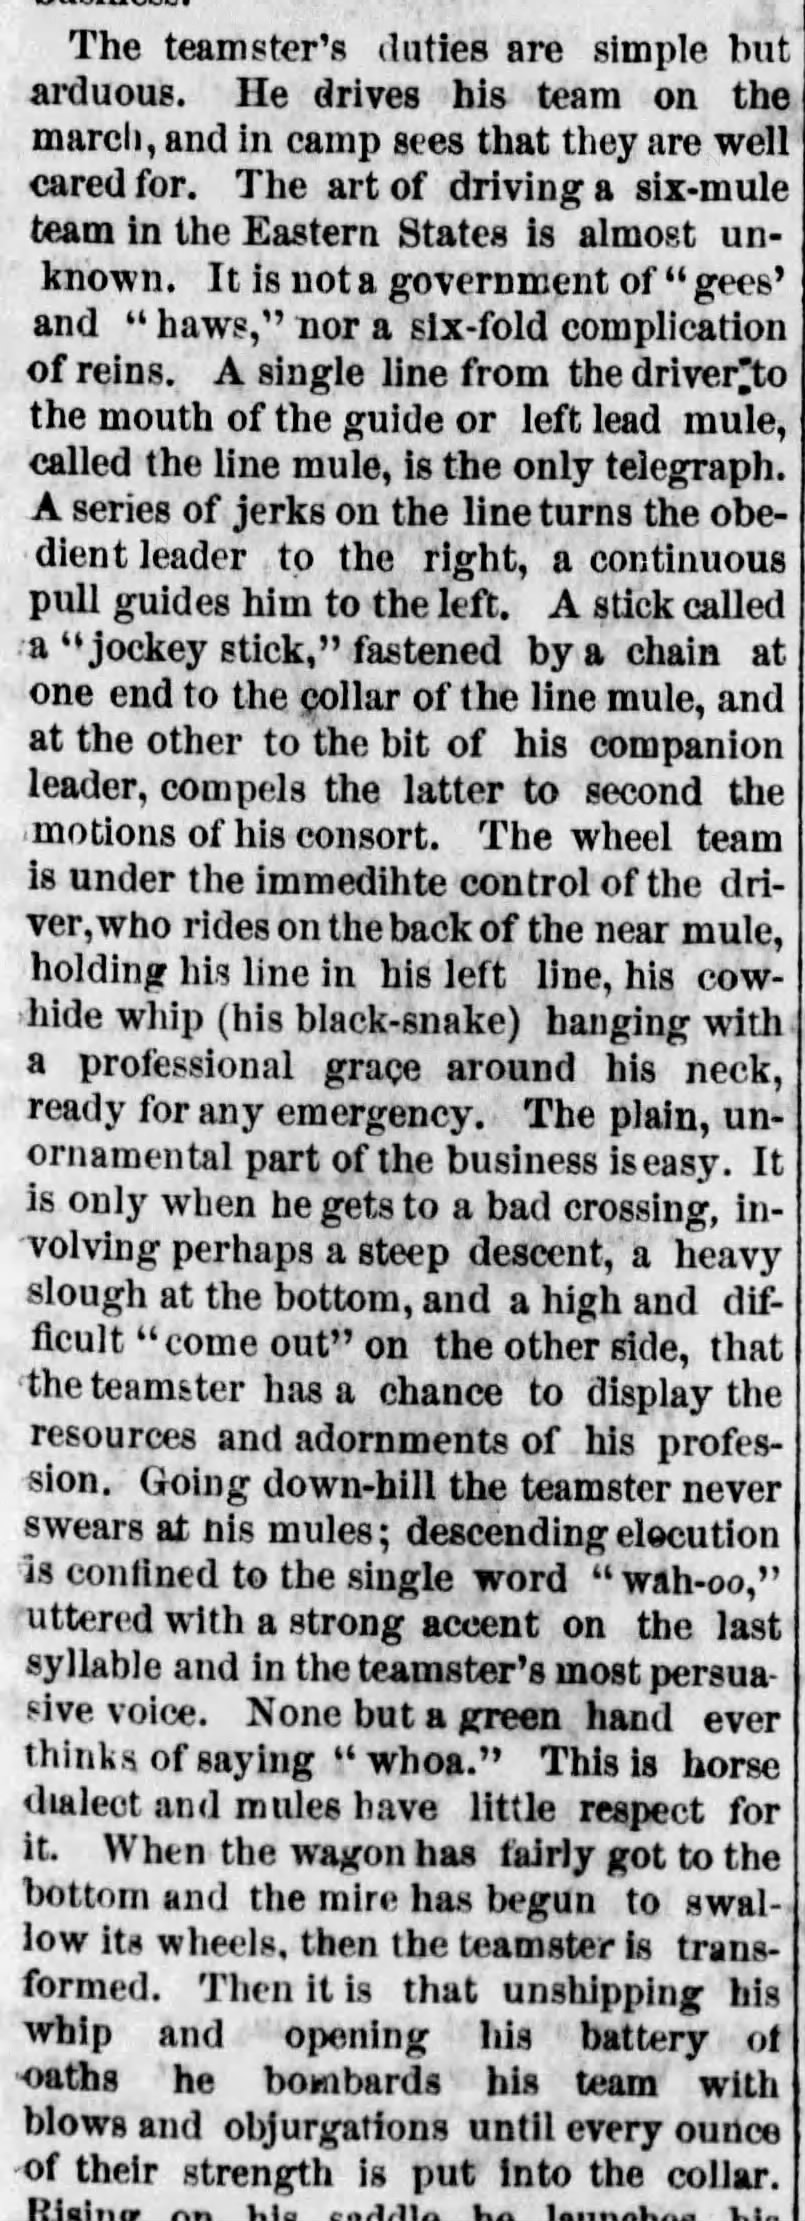 Description of a teamster's duties - 1875